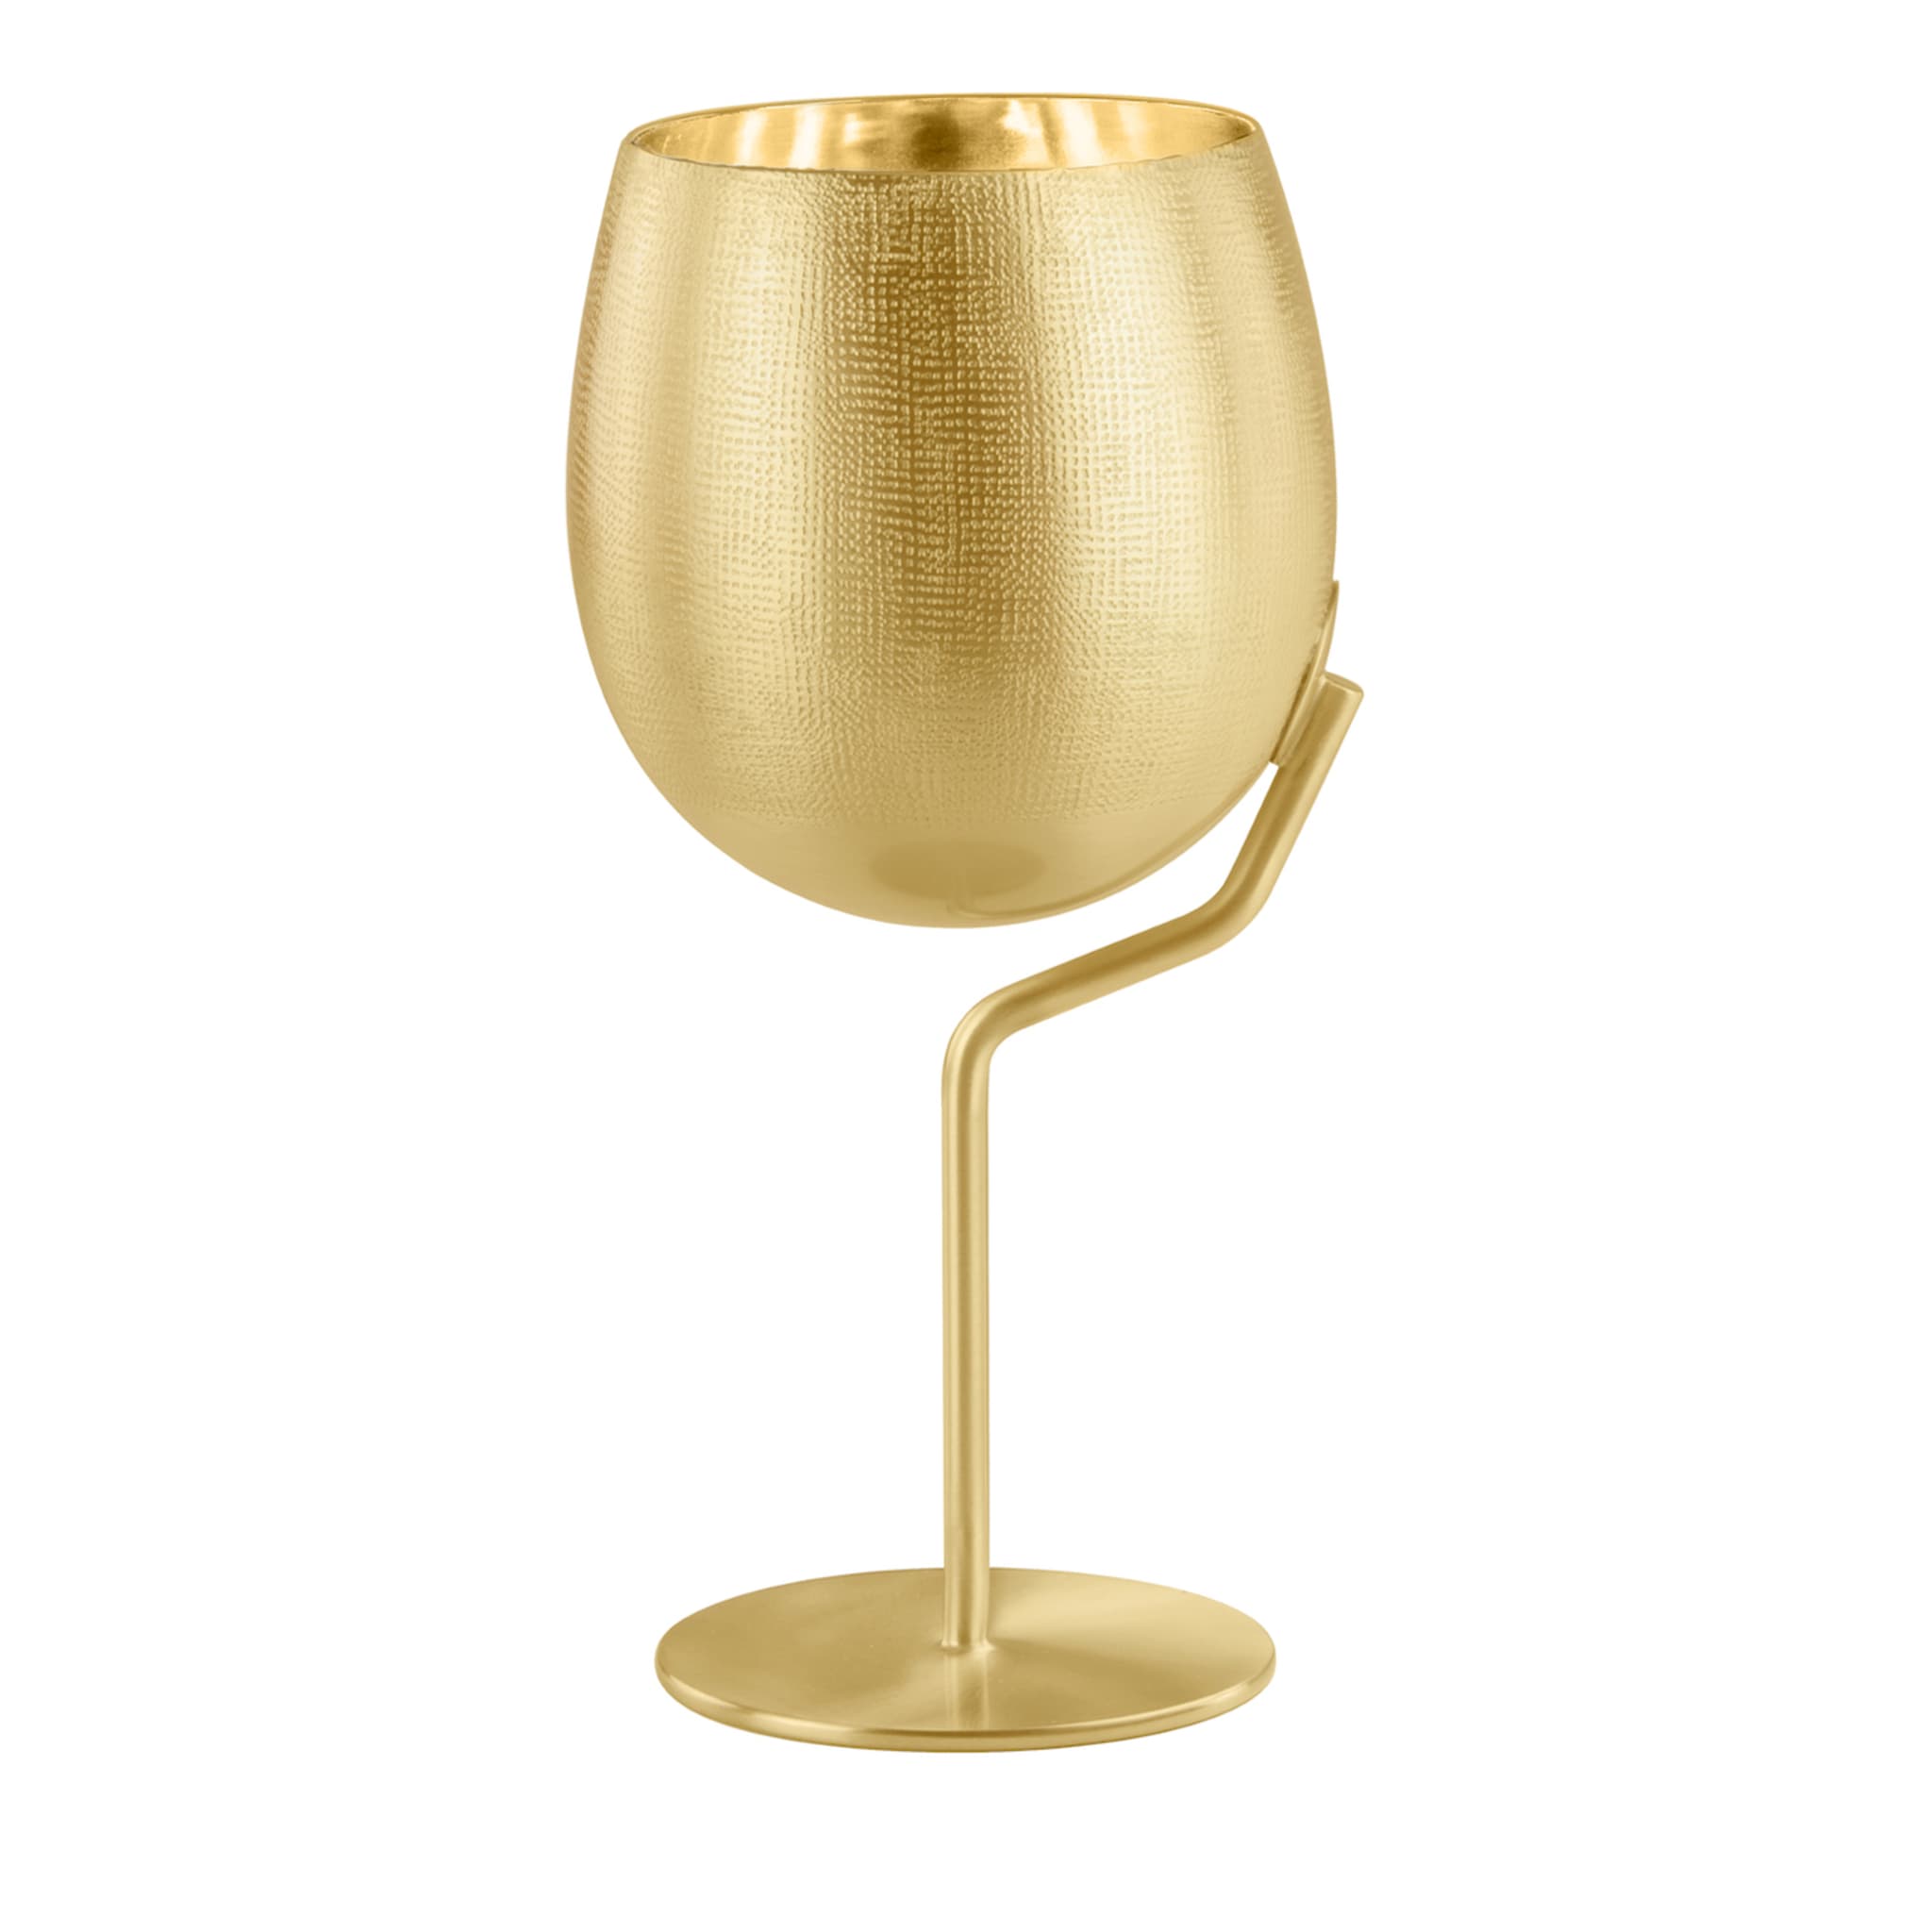 Velvet 1 Gold Plated Wine glass - Main view